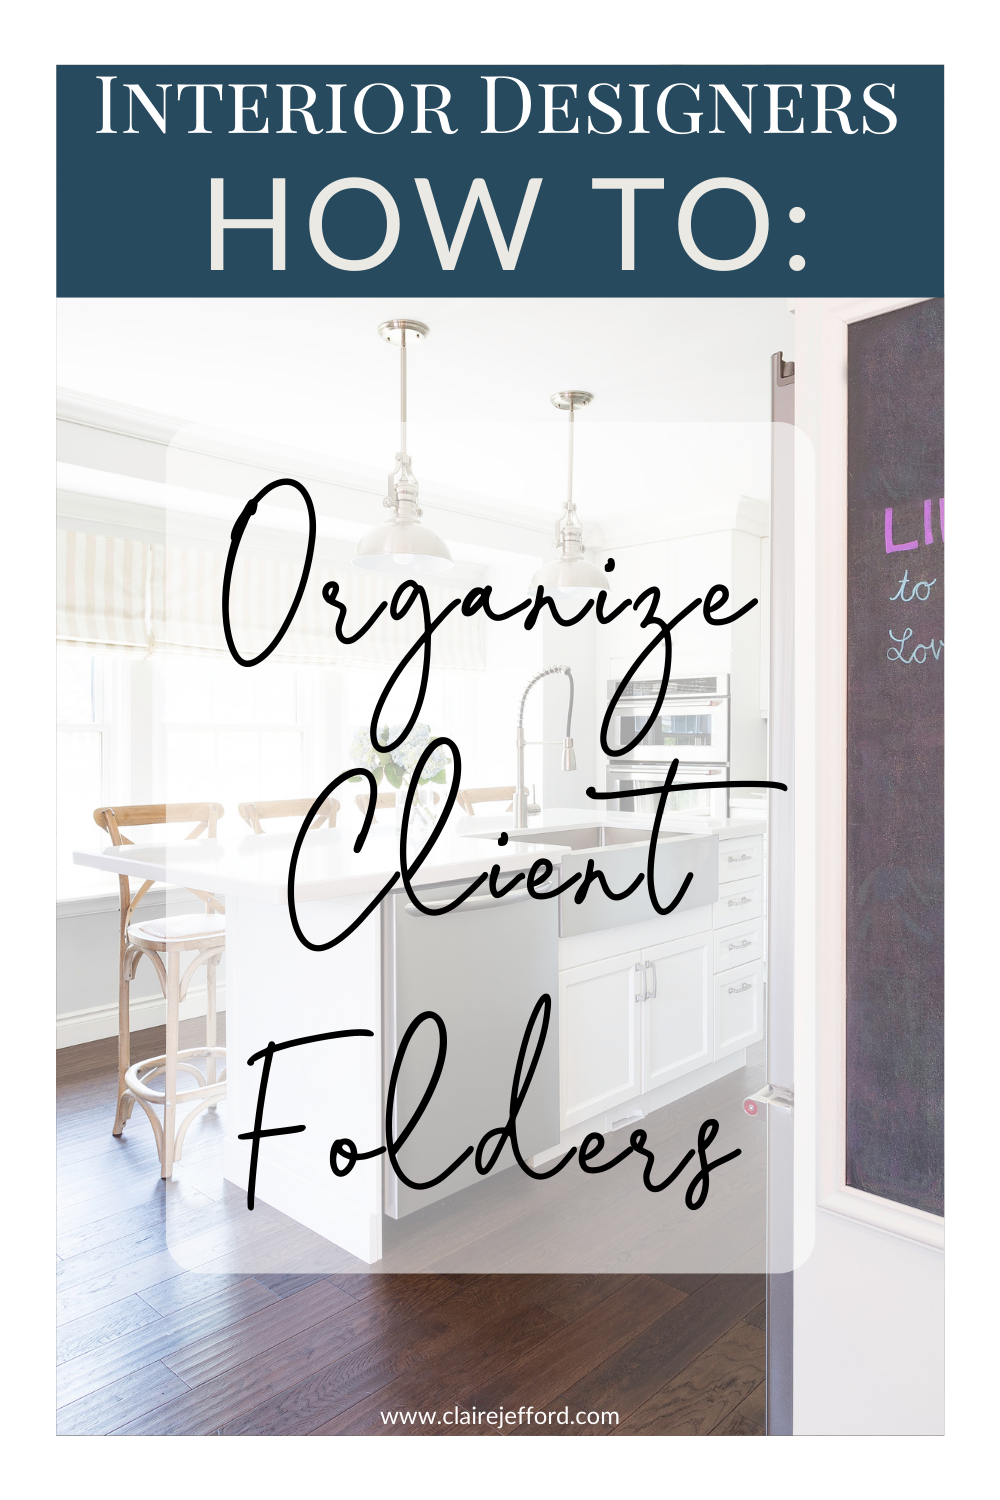 Interior Design 
Interior Designers
How to Organize Client Folders